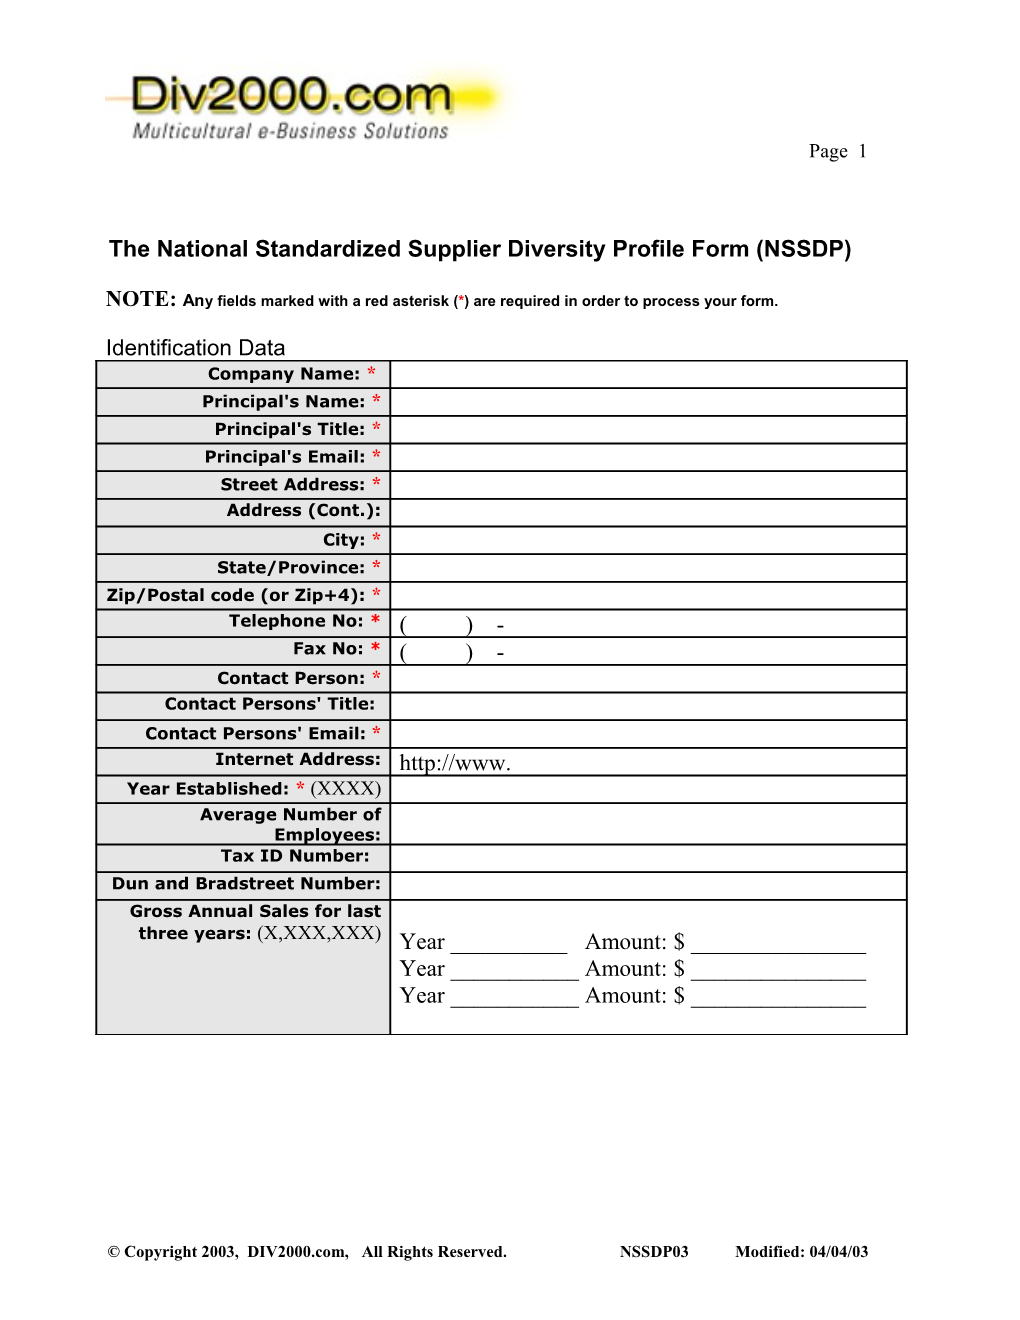 The National Standardized Supplier Diversity Profile Form (NSSDP)